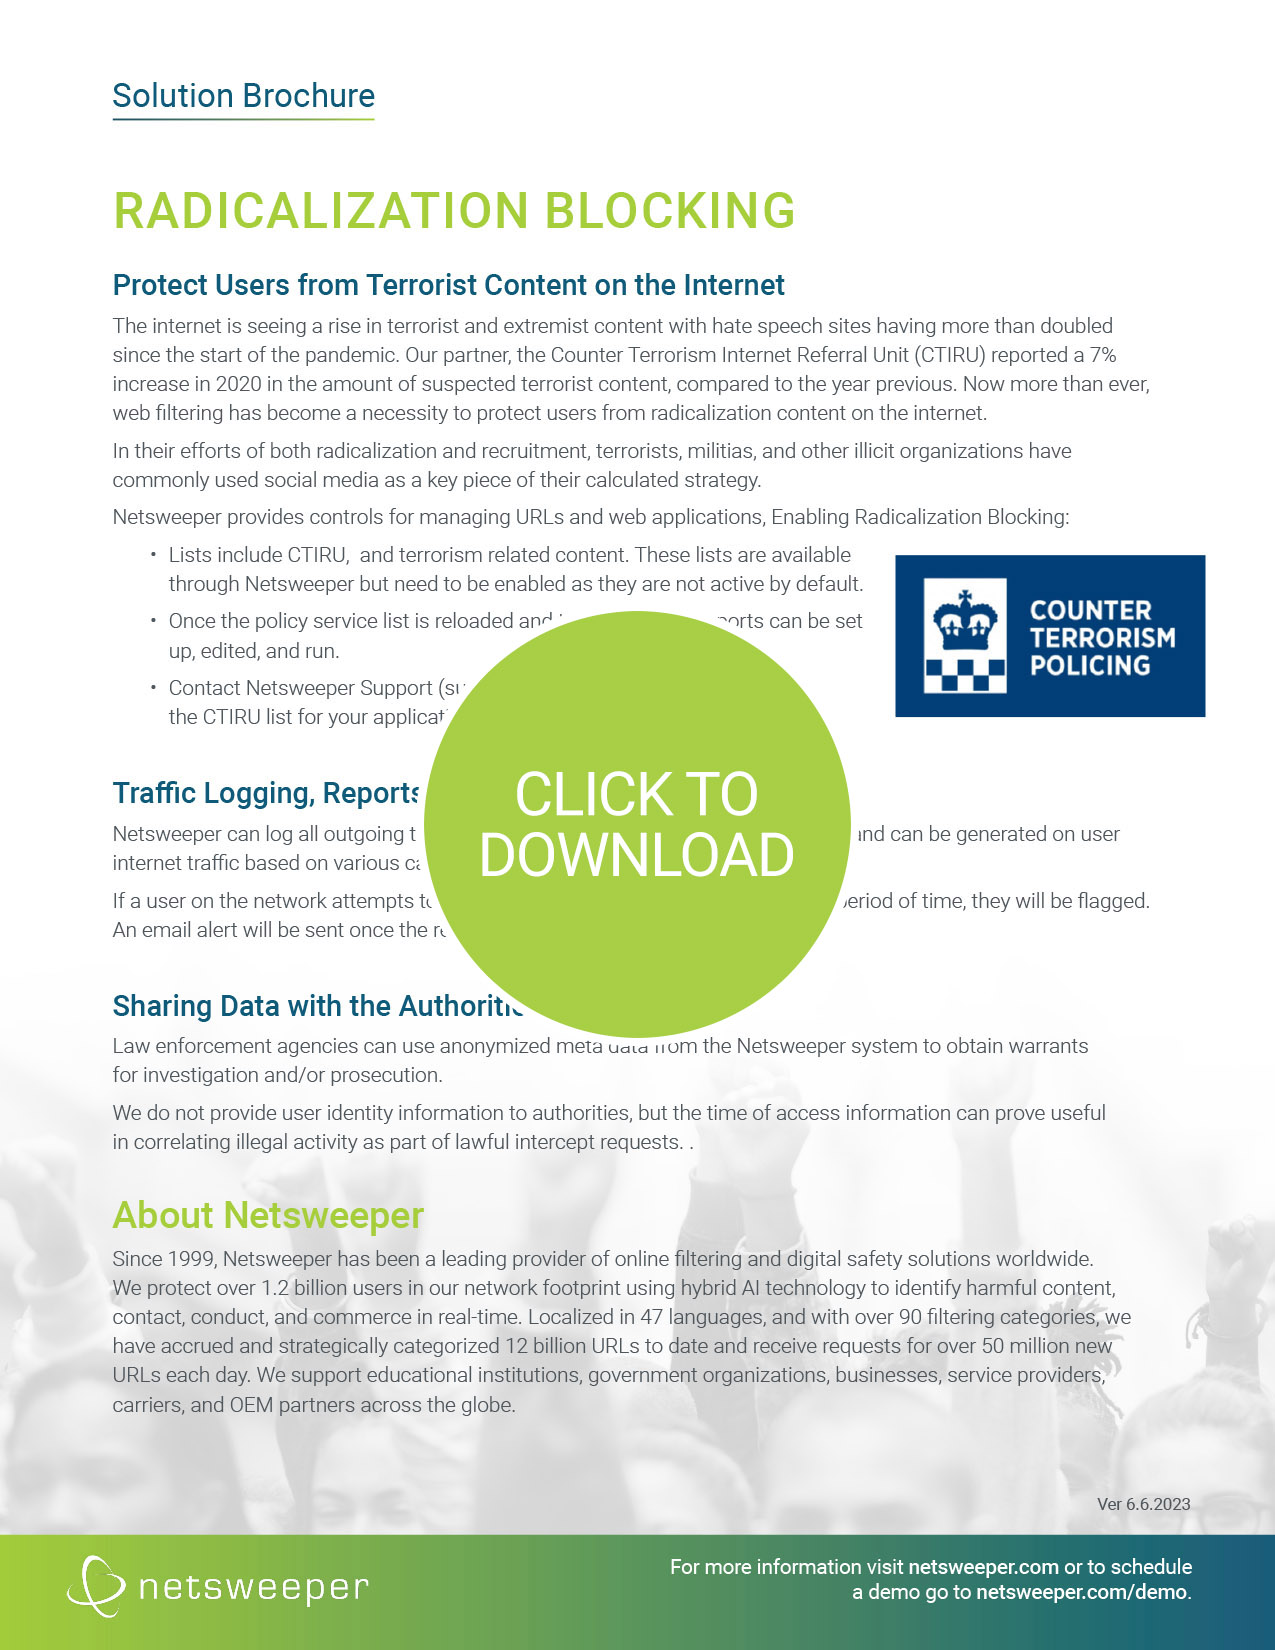 Solution Brochure: Radicalization Blocking